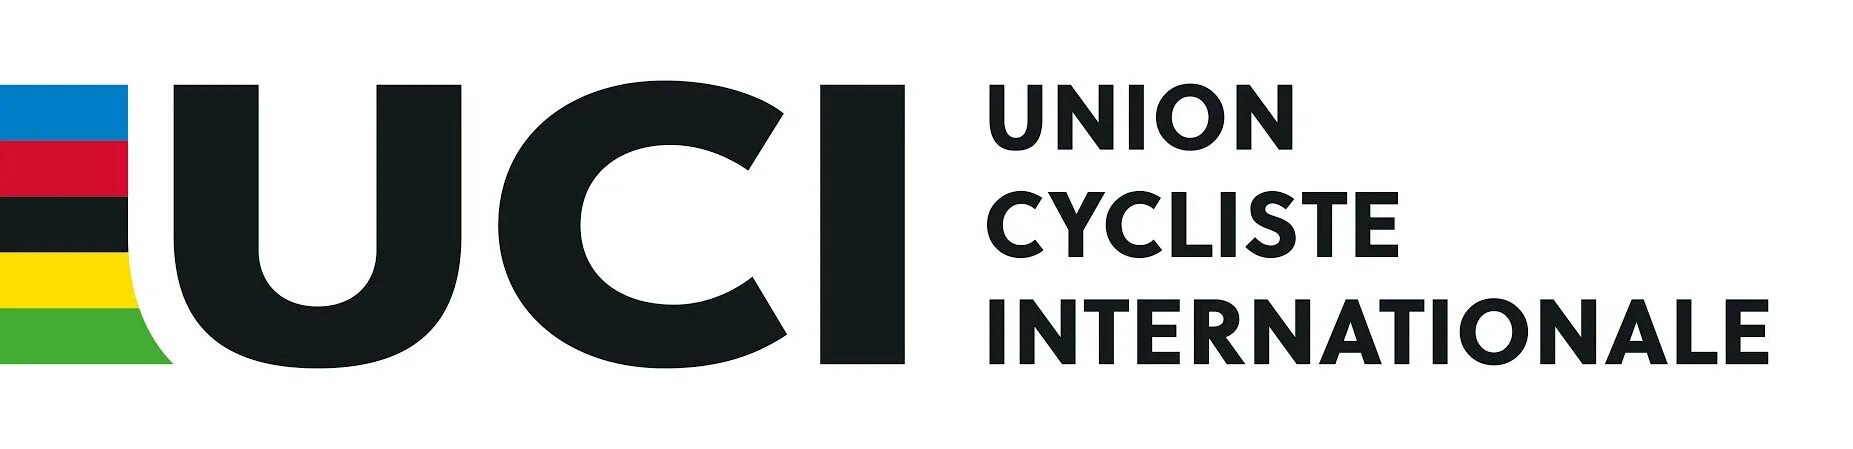 Международная федерация союзов. Международный Союз велосипедистов. UCI логотип. Международный Союз велосипедистов UCI. Международная Федерация велосипедного спорта.